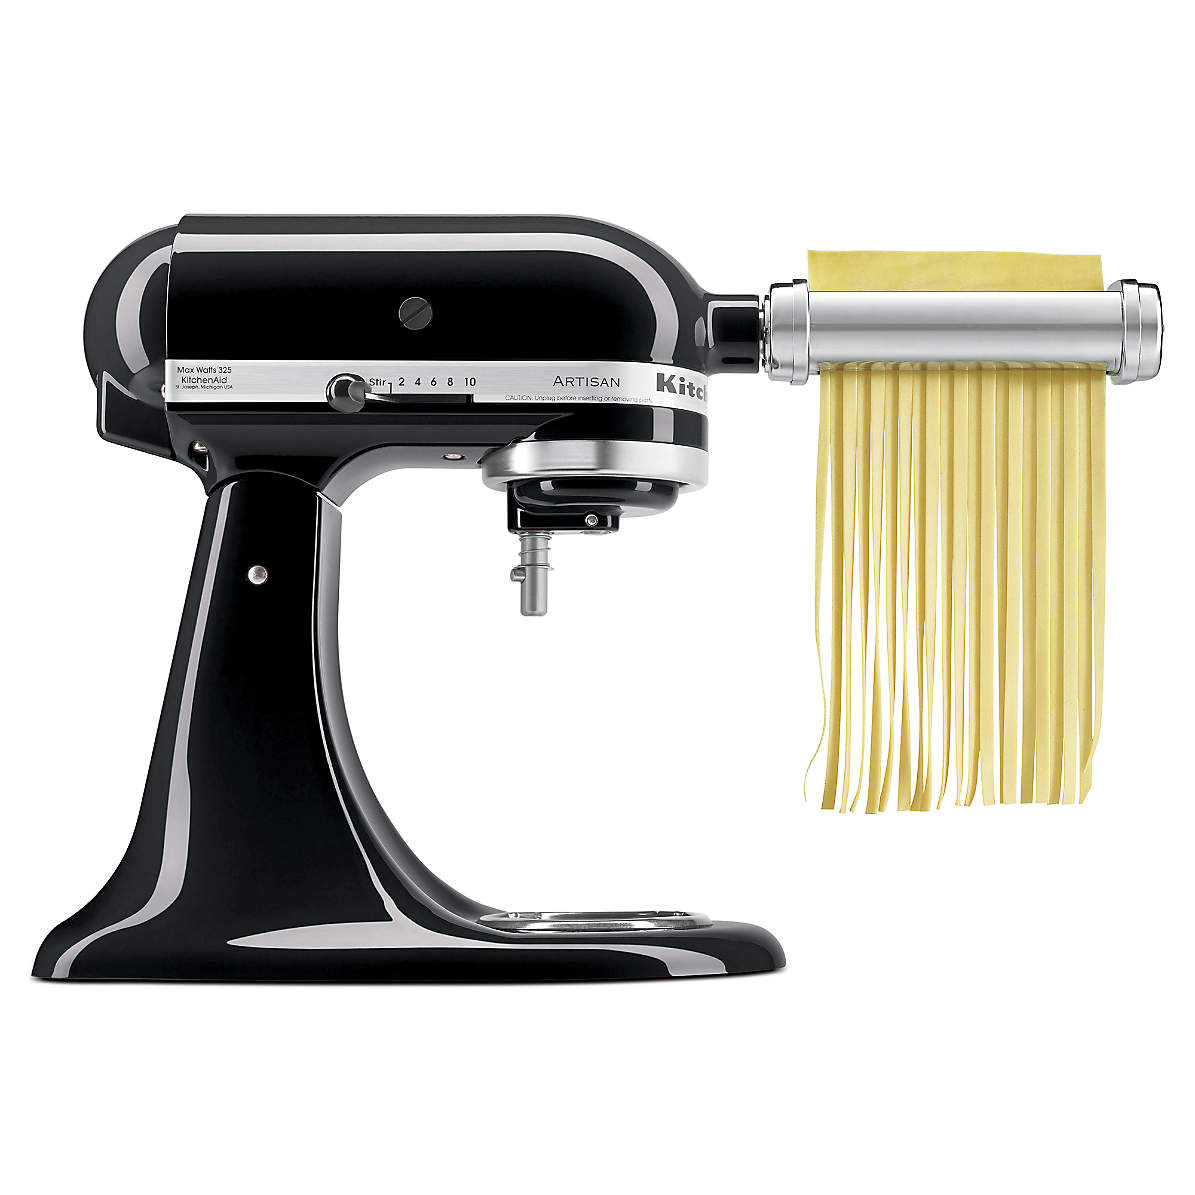 Details about   3-Piece Pasta Roller & Maker Set Attachment For KitchenAid Stand Mixer Machine 